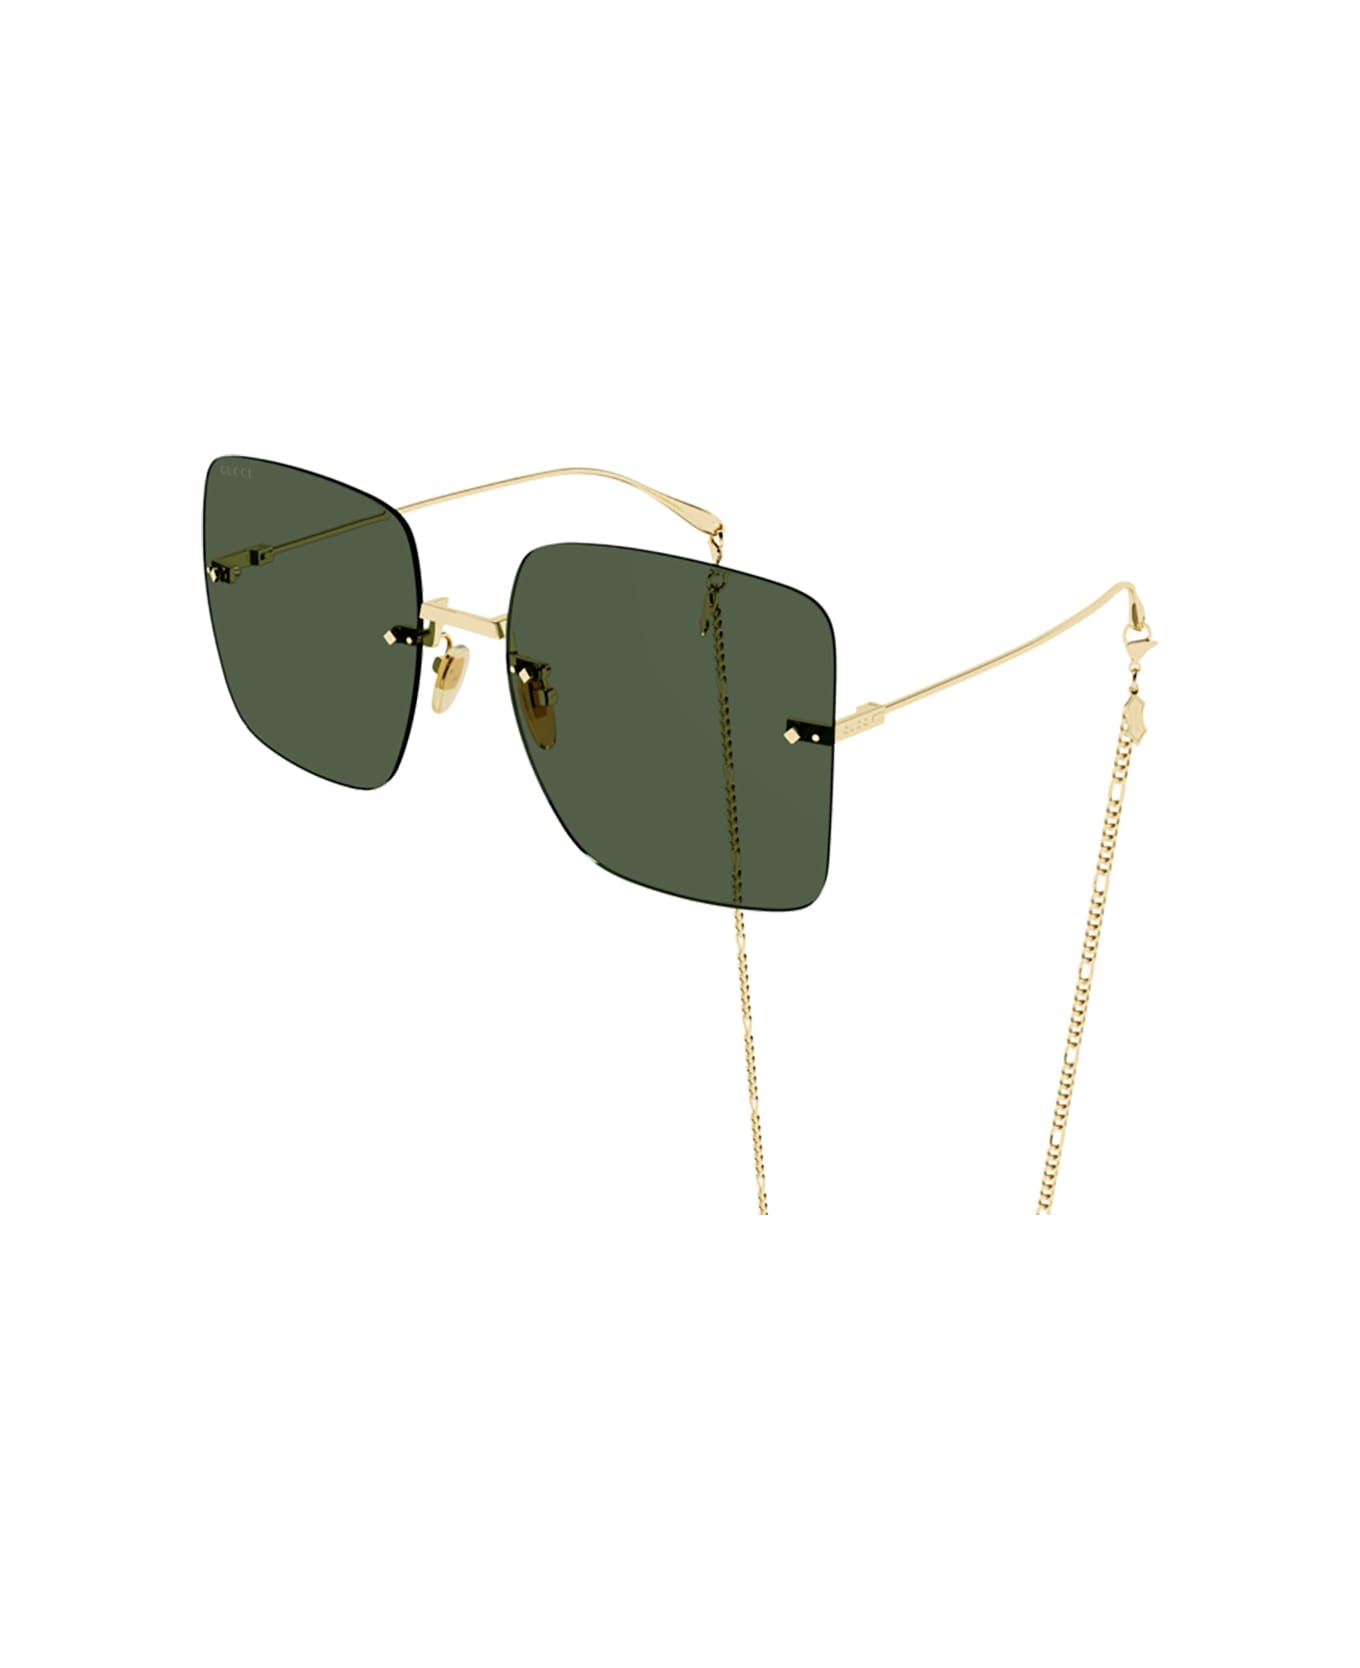 Gucci Eyewear 1cai4d80a Sunglasses - 002 gold gold green